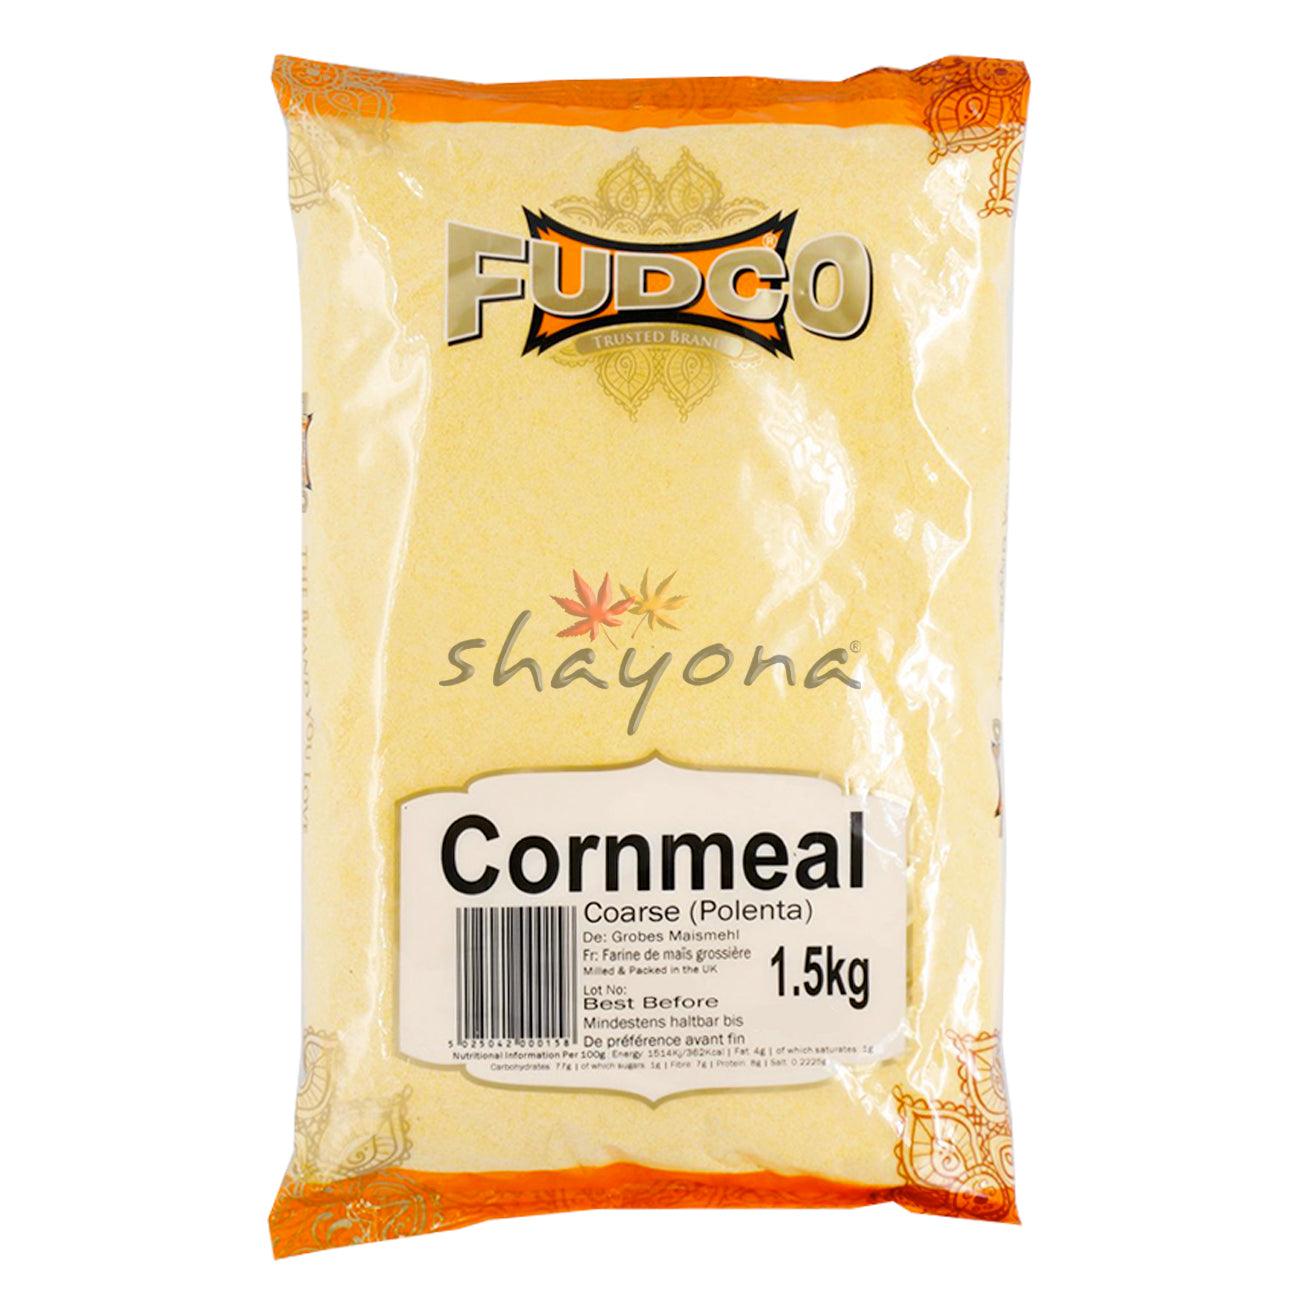 Fudco Cornmeal Coarse - Shayona UK